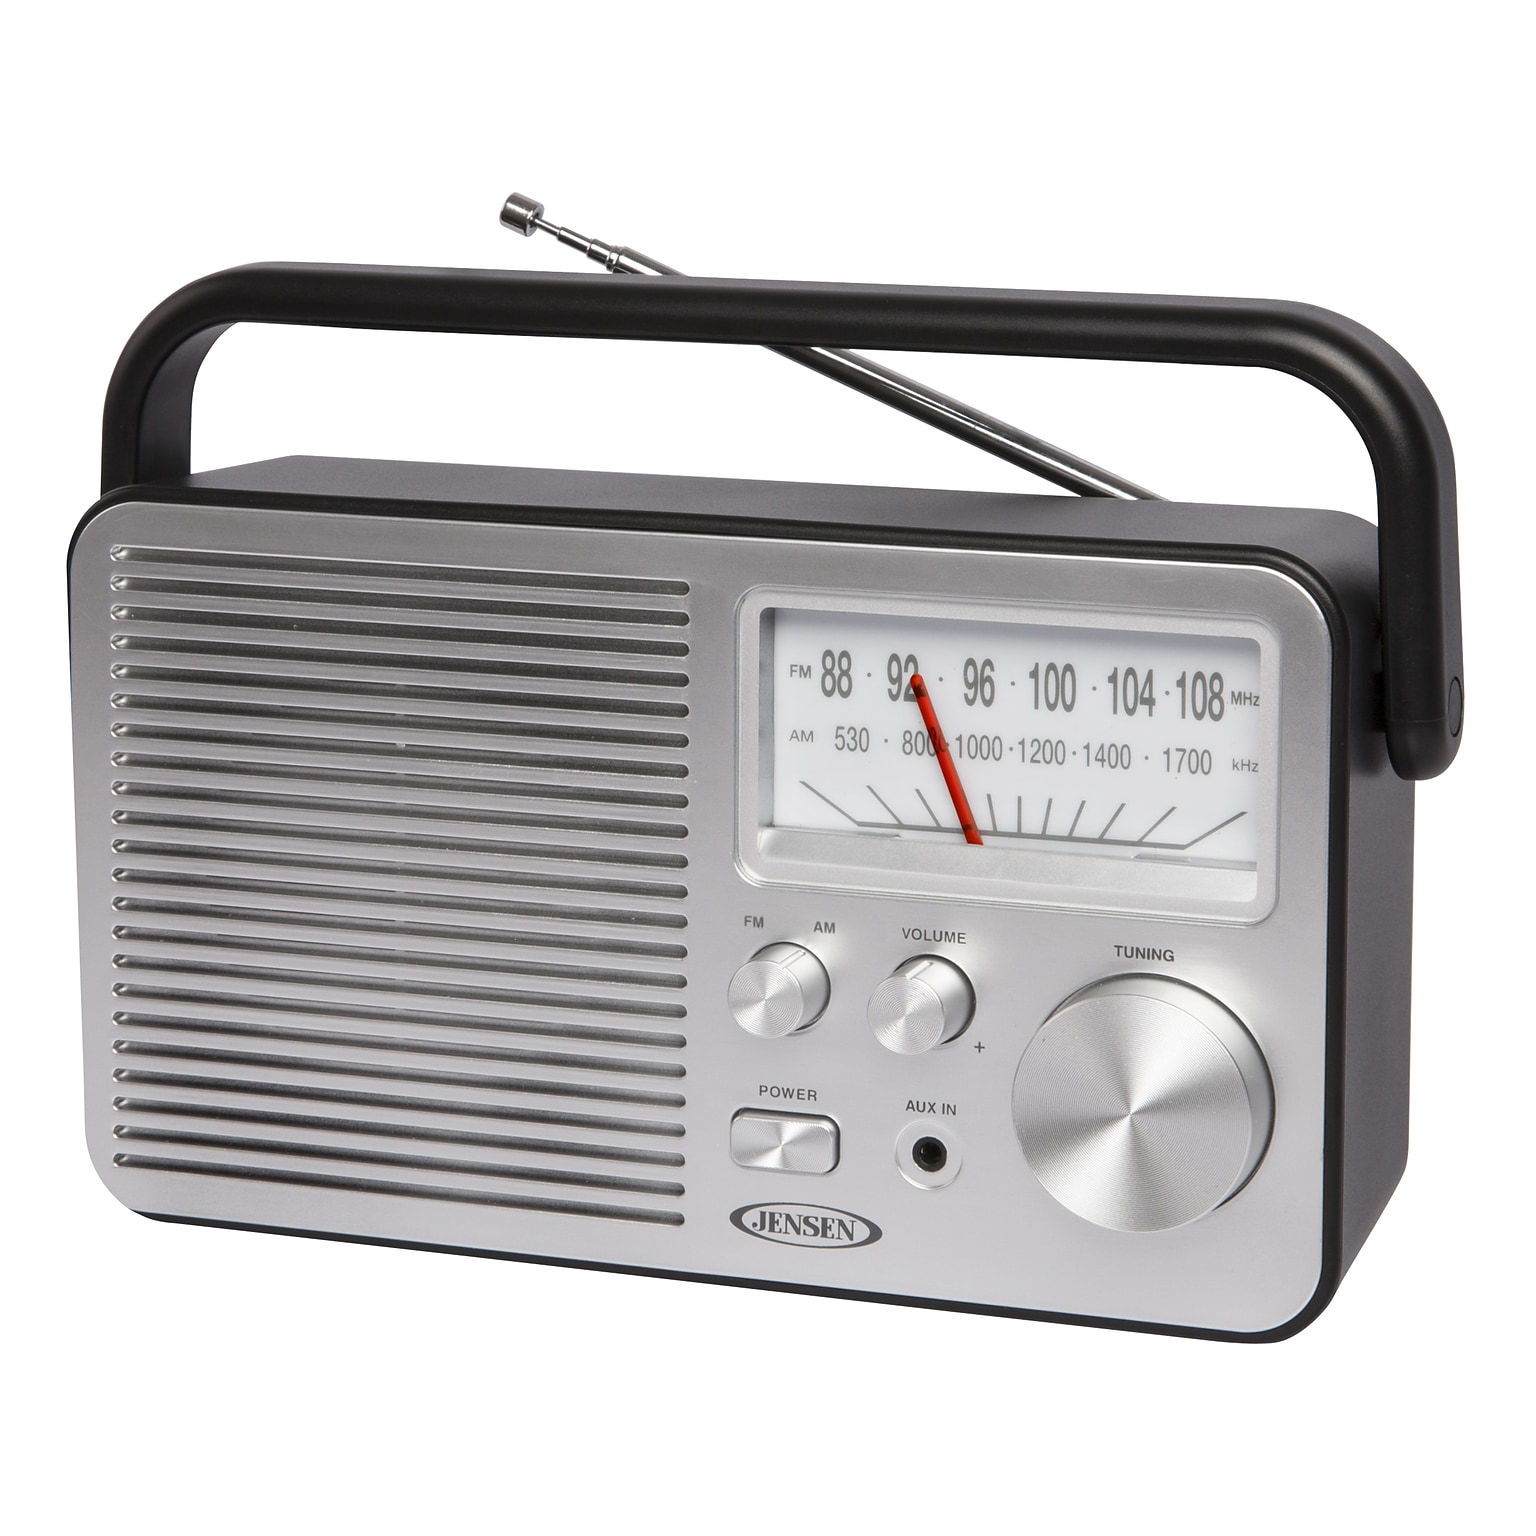 Jensen MR-750 Portable AM/FM Radio, Black